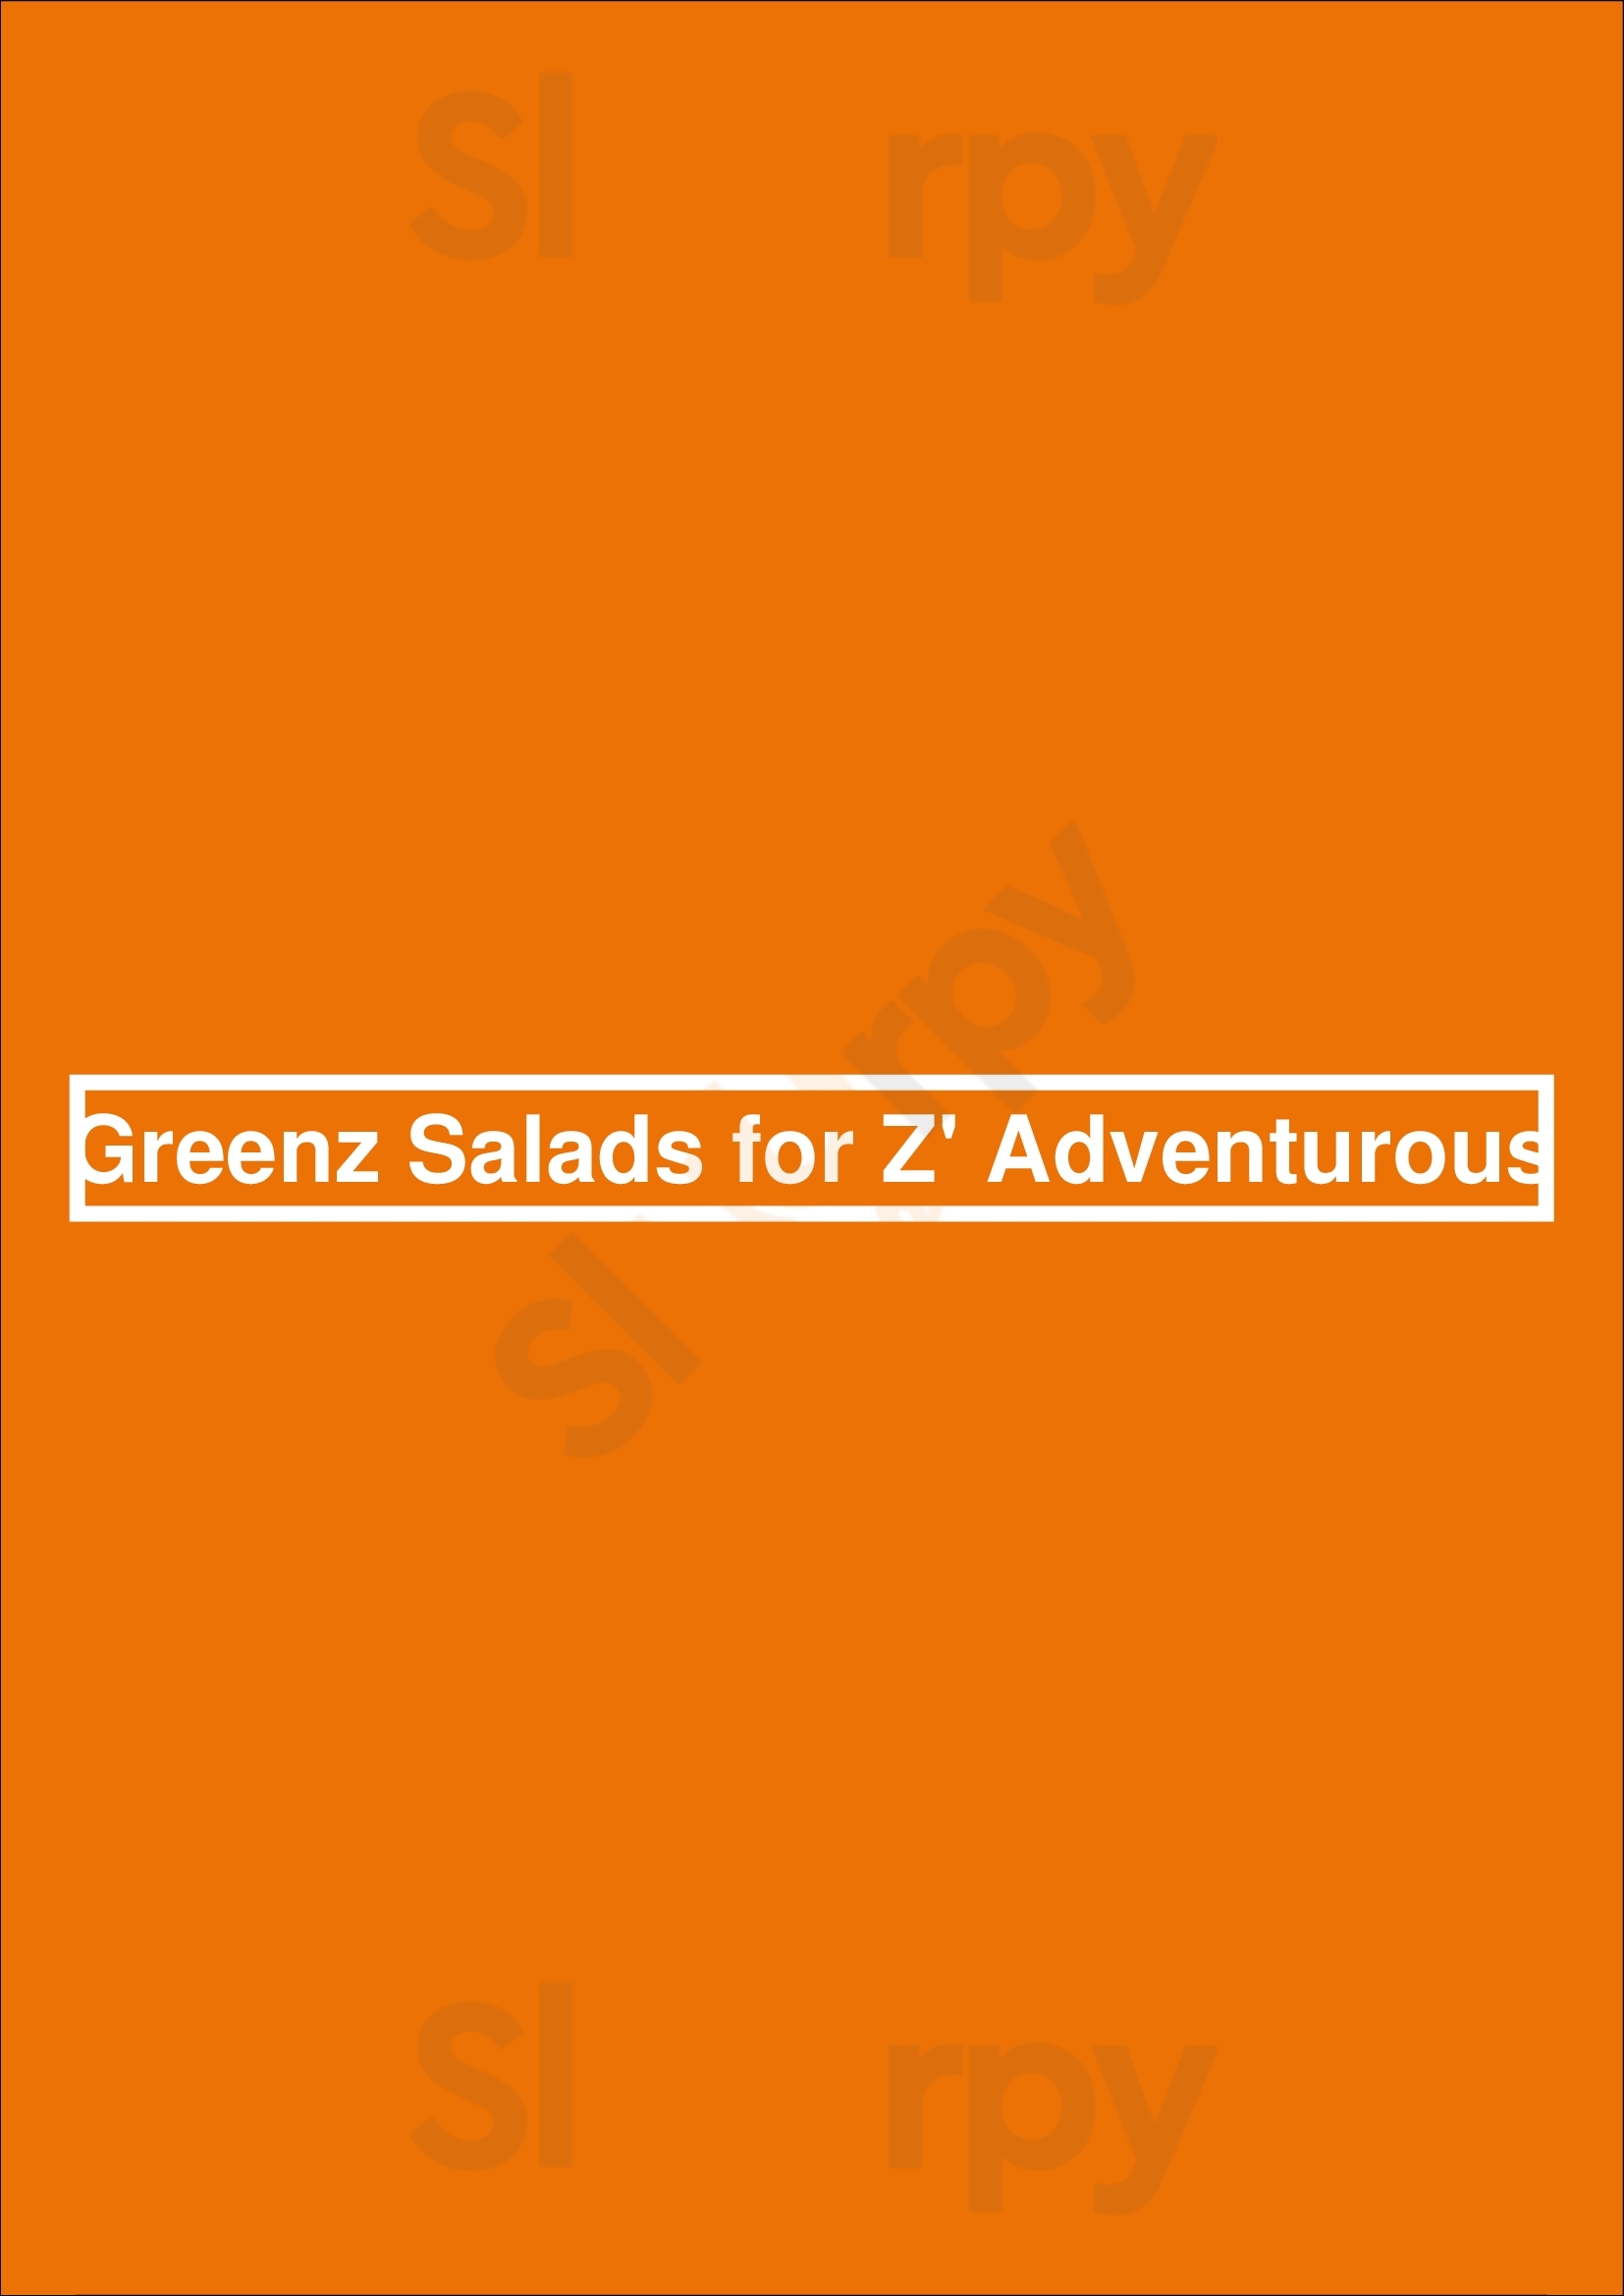 Greenz Salads For Z' Adventurous Dallas Menu - 1